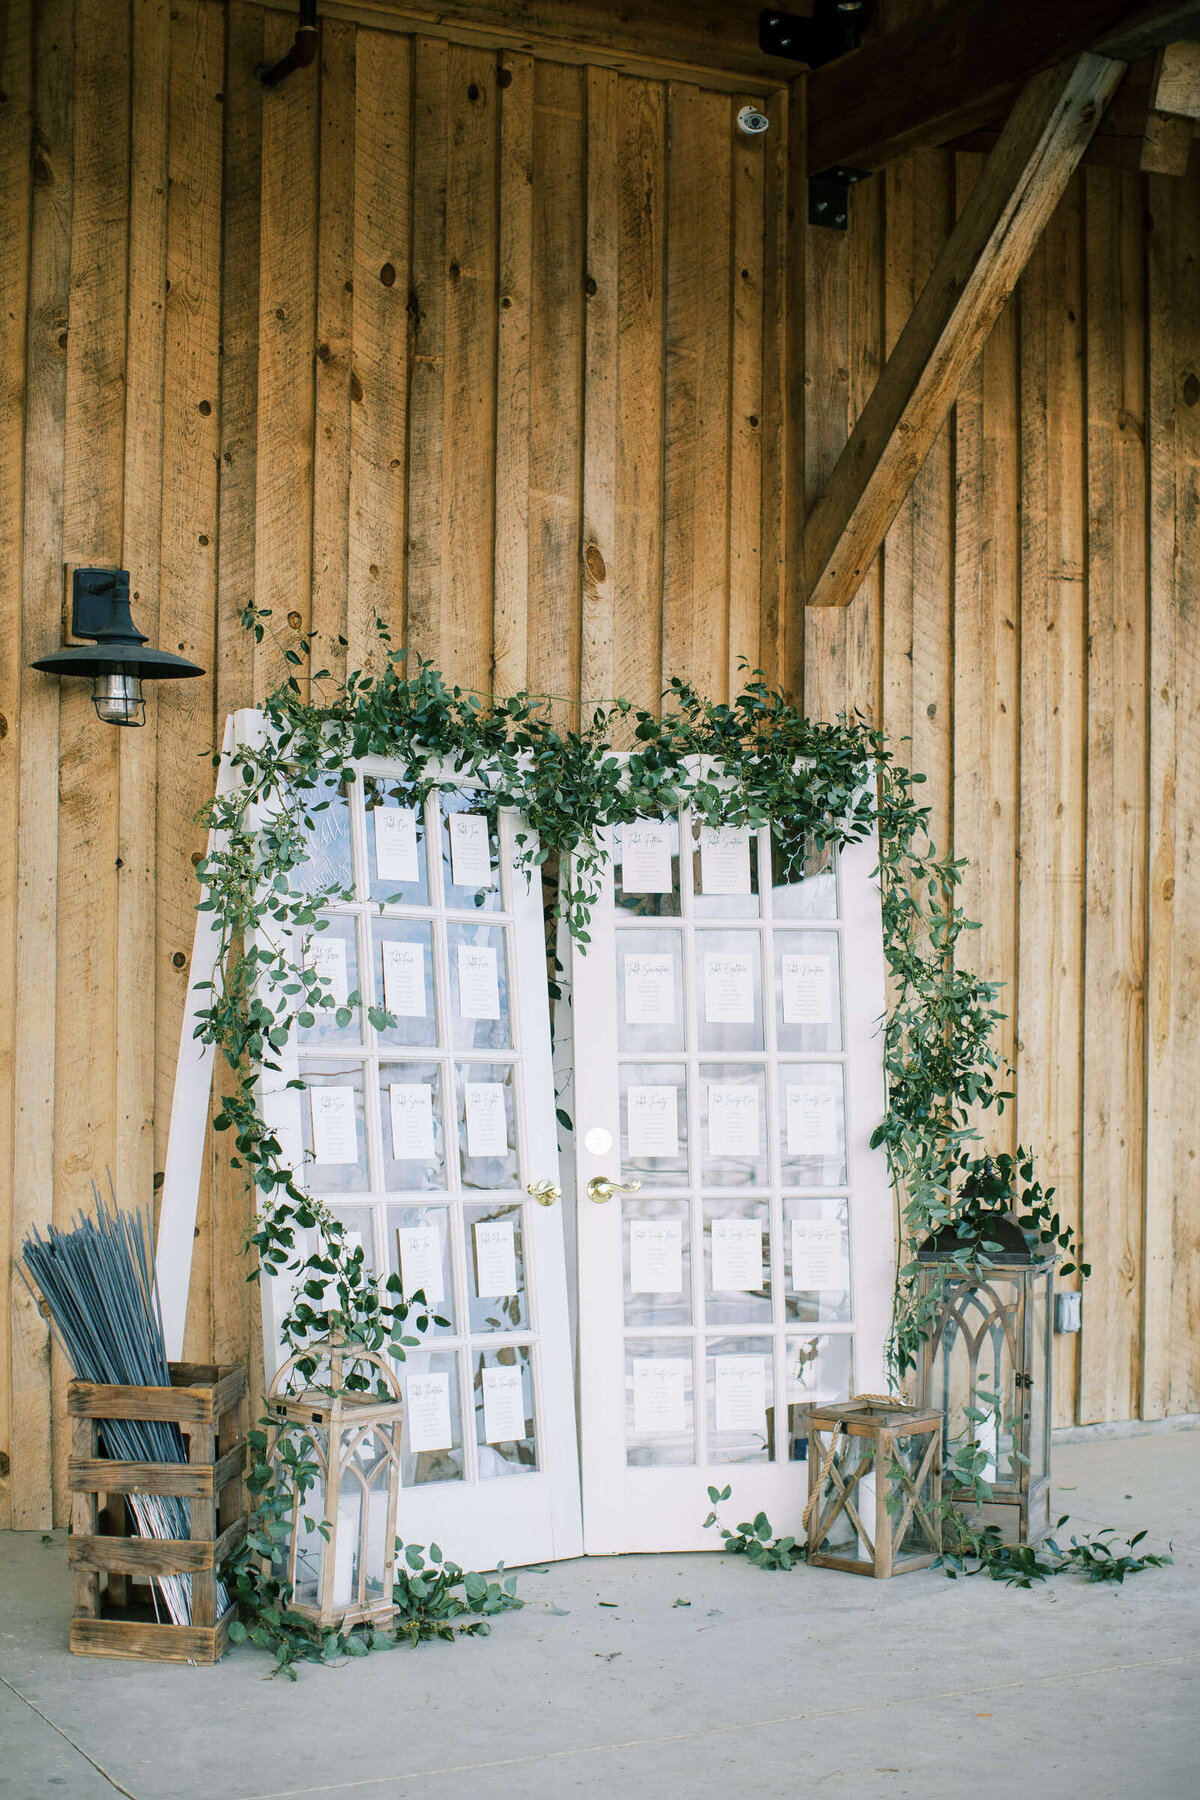 Rustic barn wedding seating arrangements on old doors with greenery